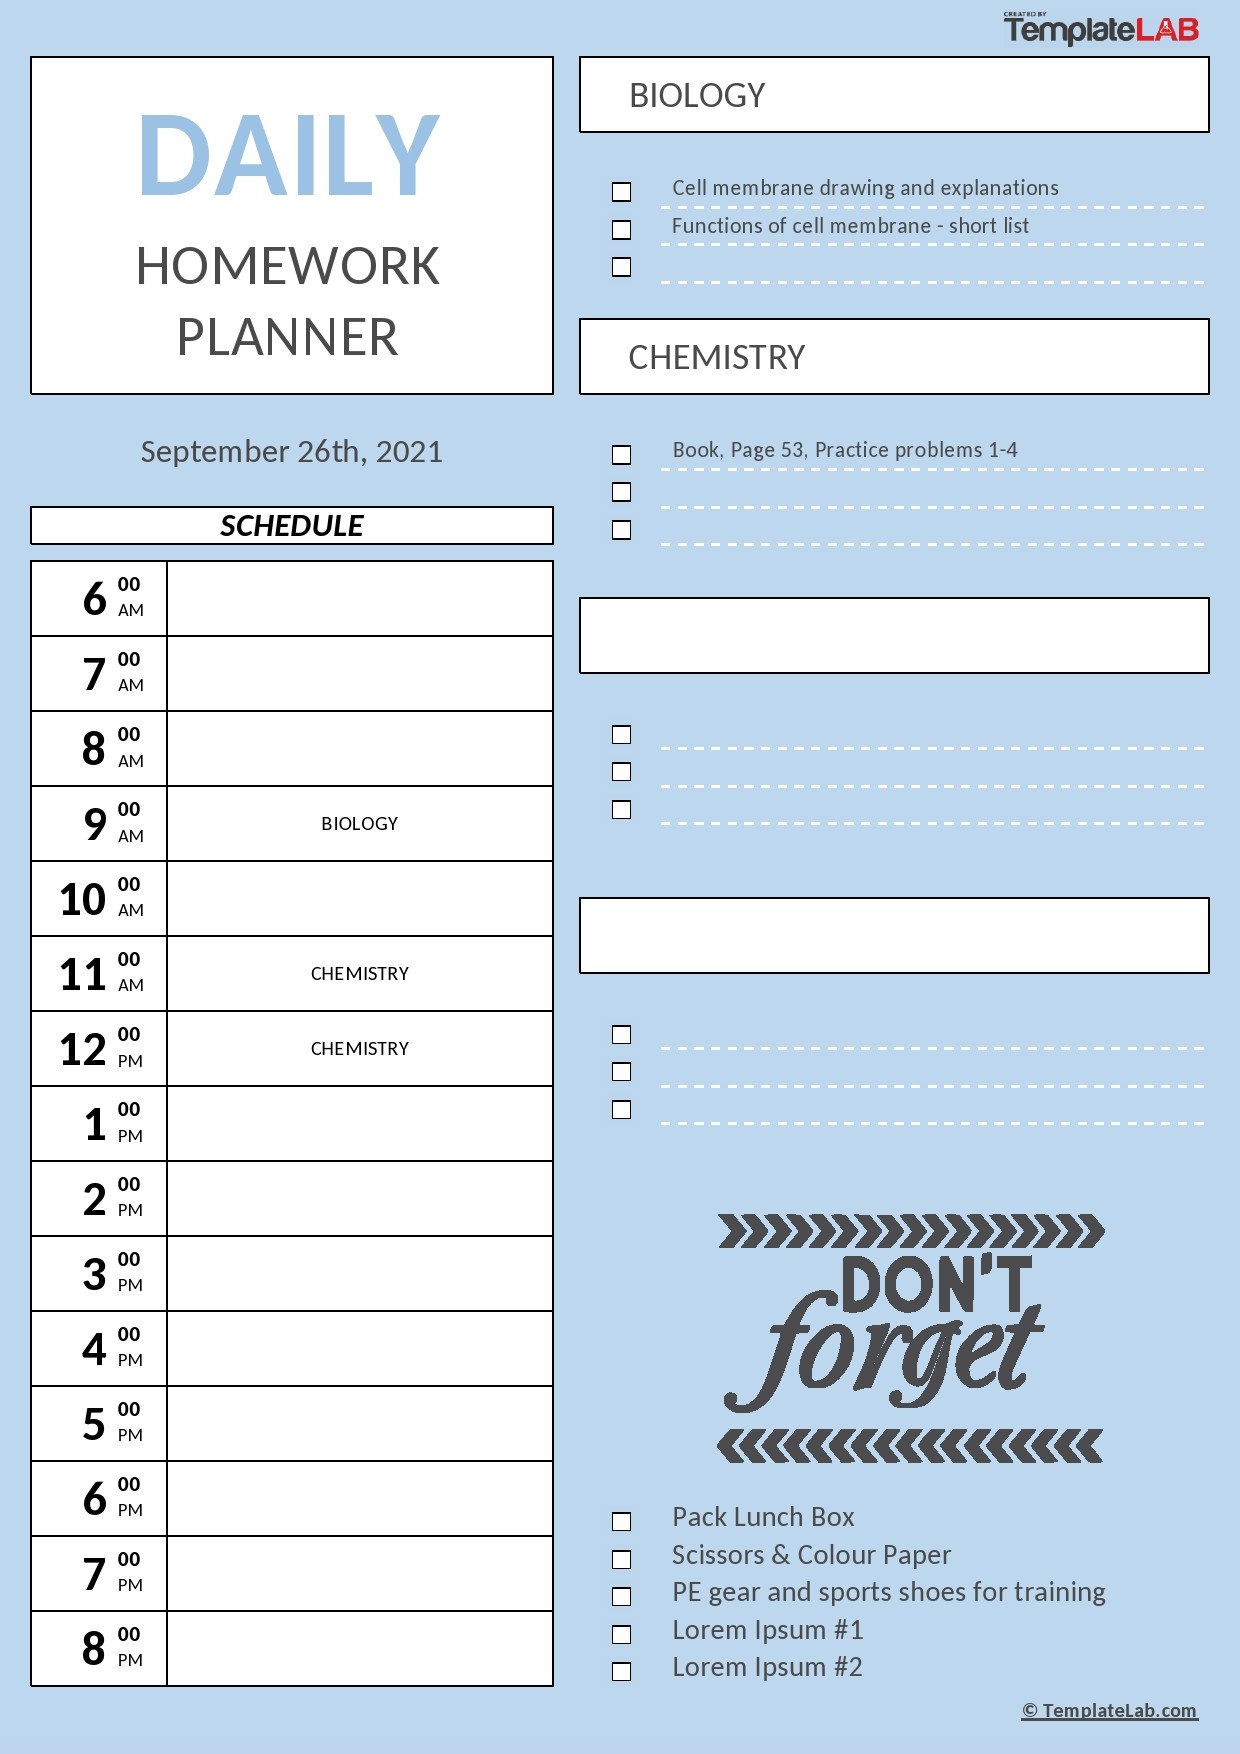 Free Daily Homework Planner Template - TemplateLab.com